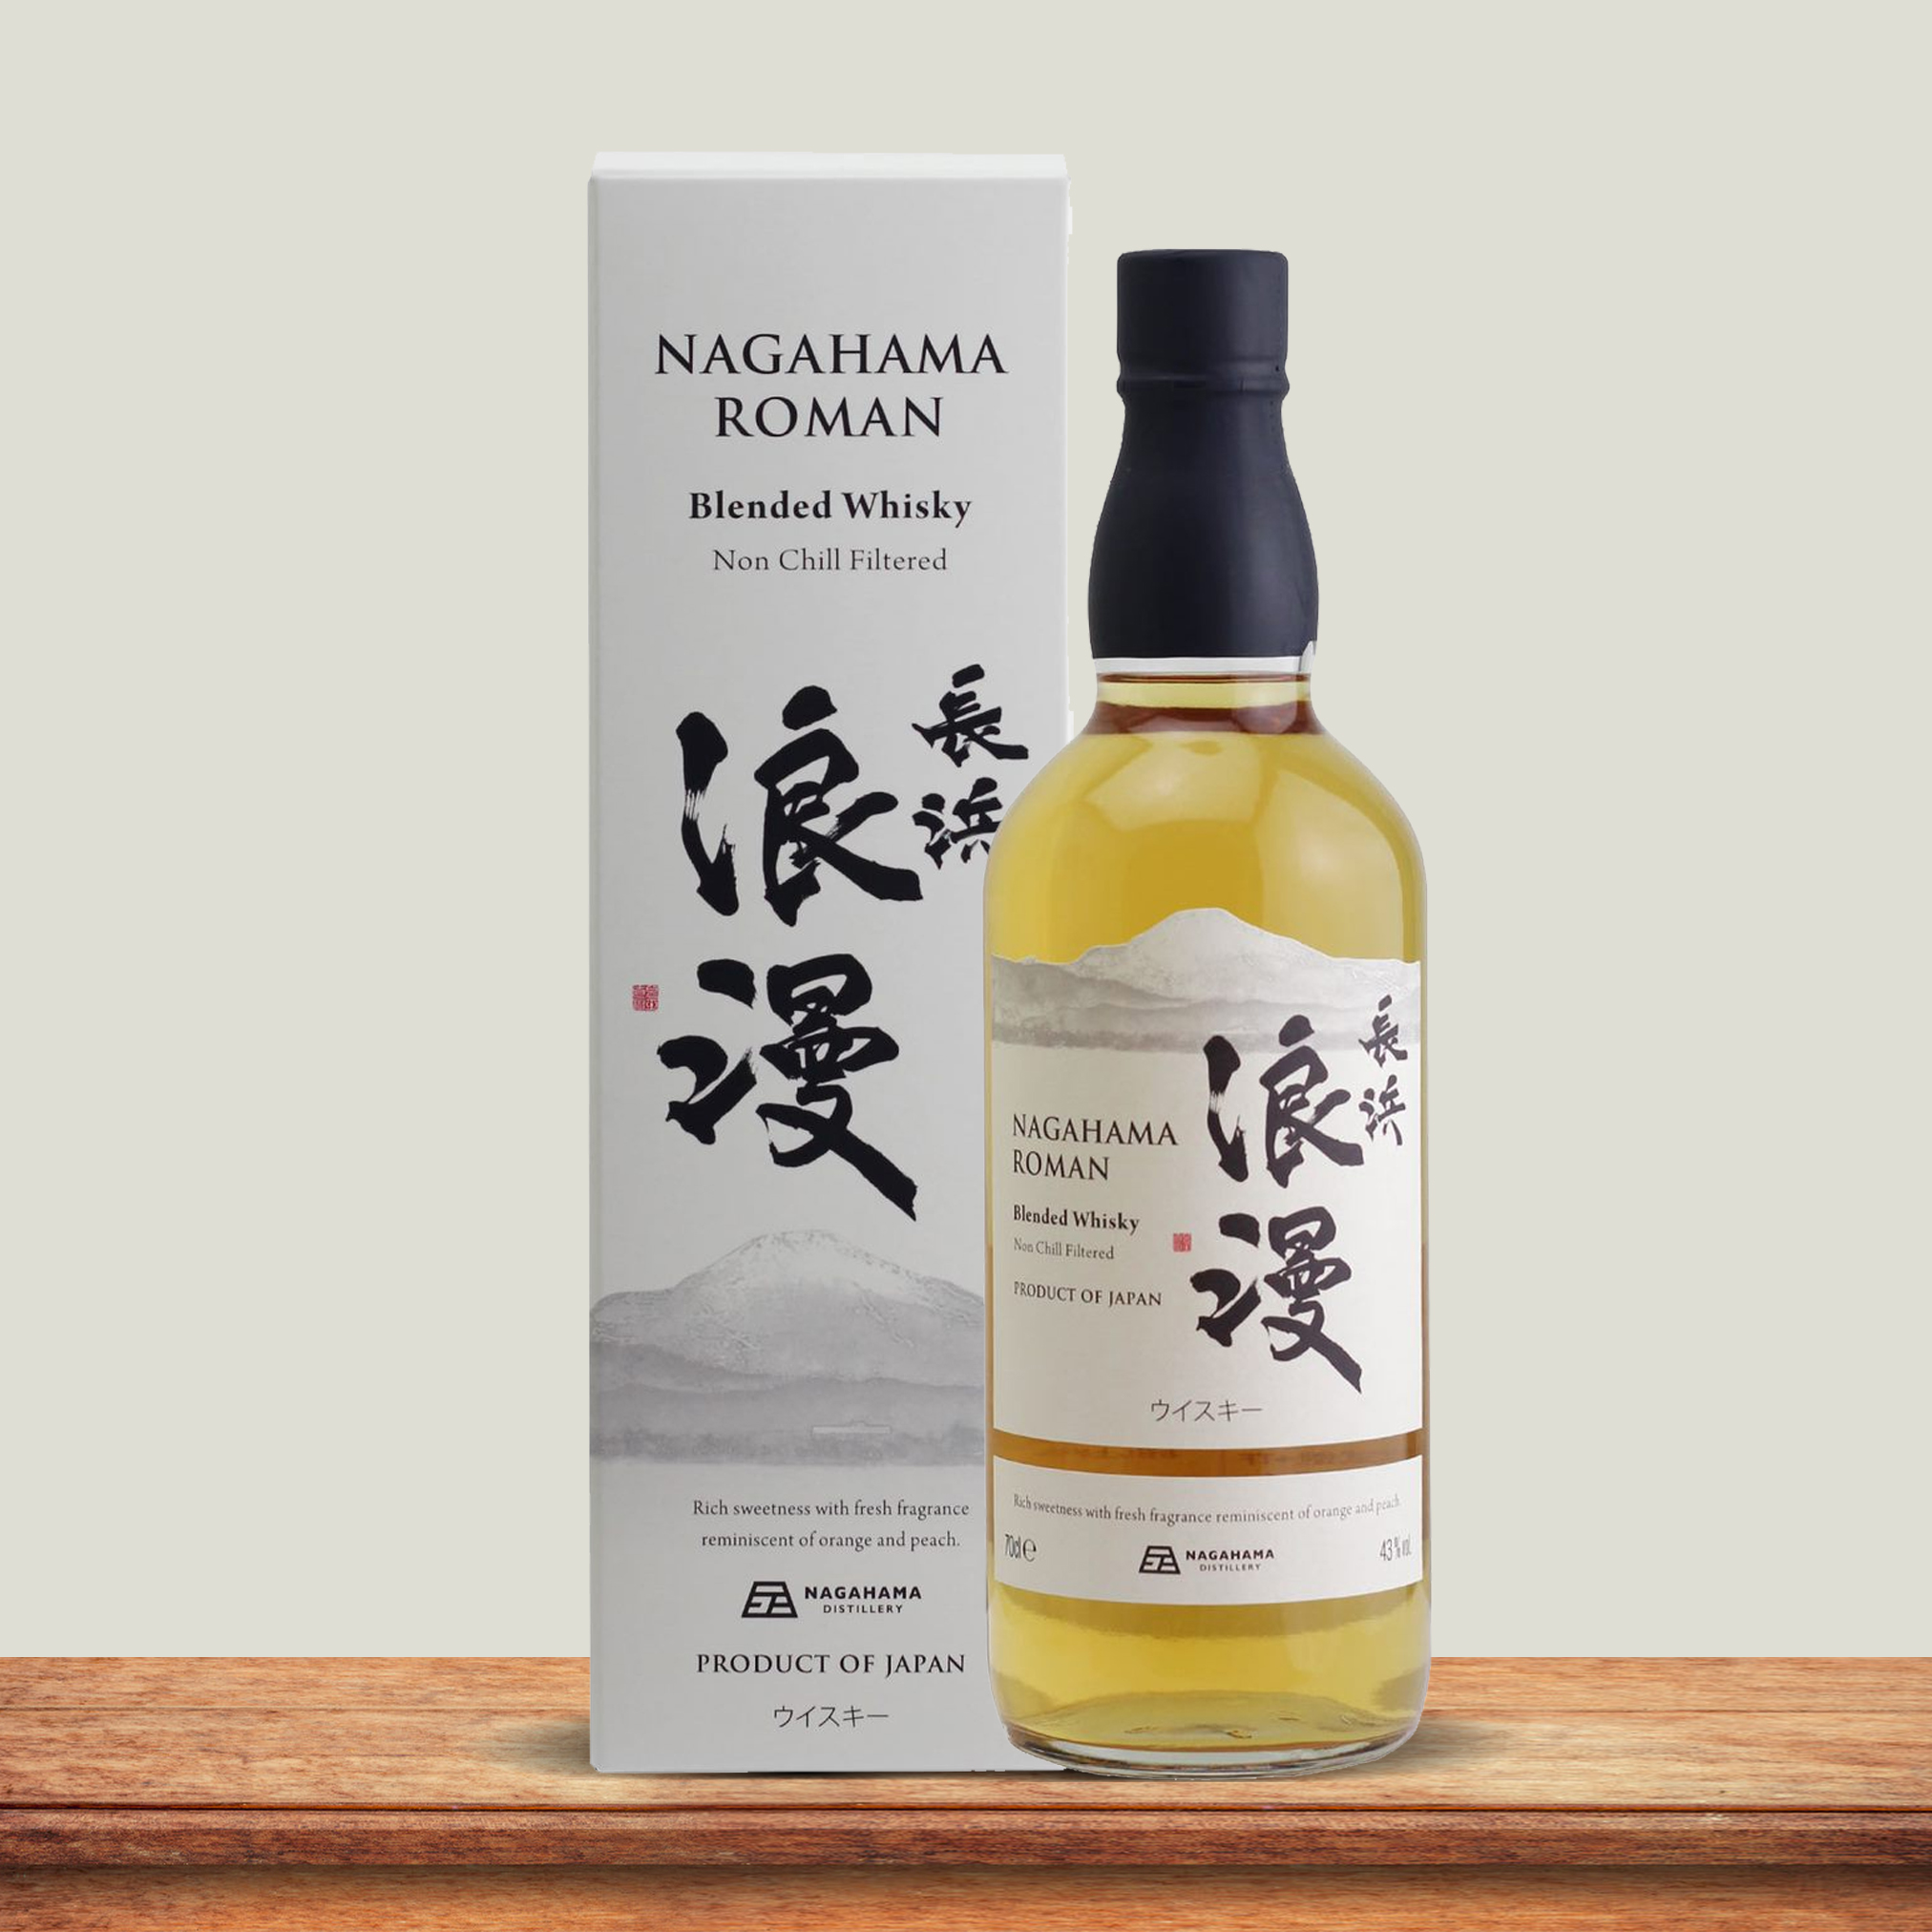 Nagahama Roman Blended Whisky 43% 700ml